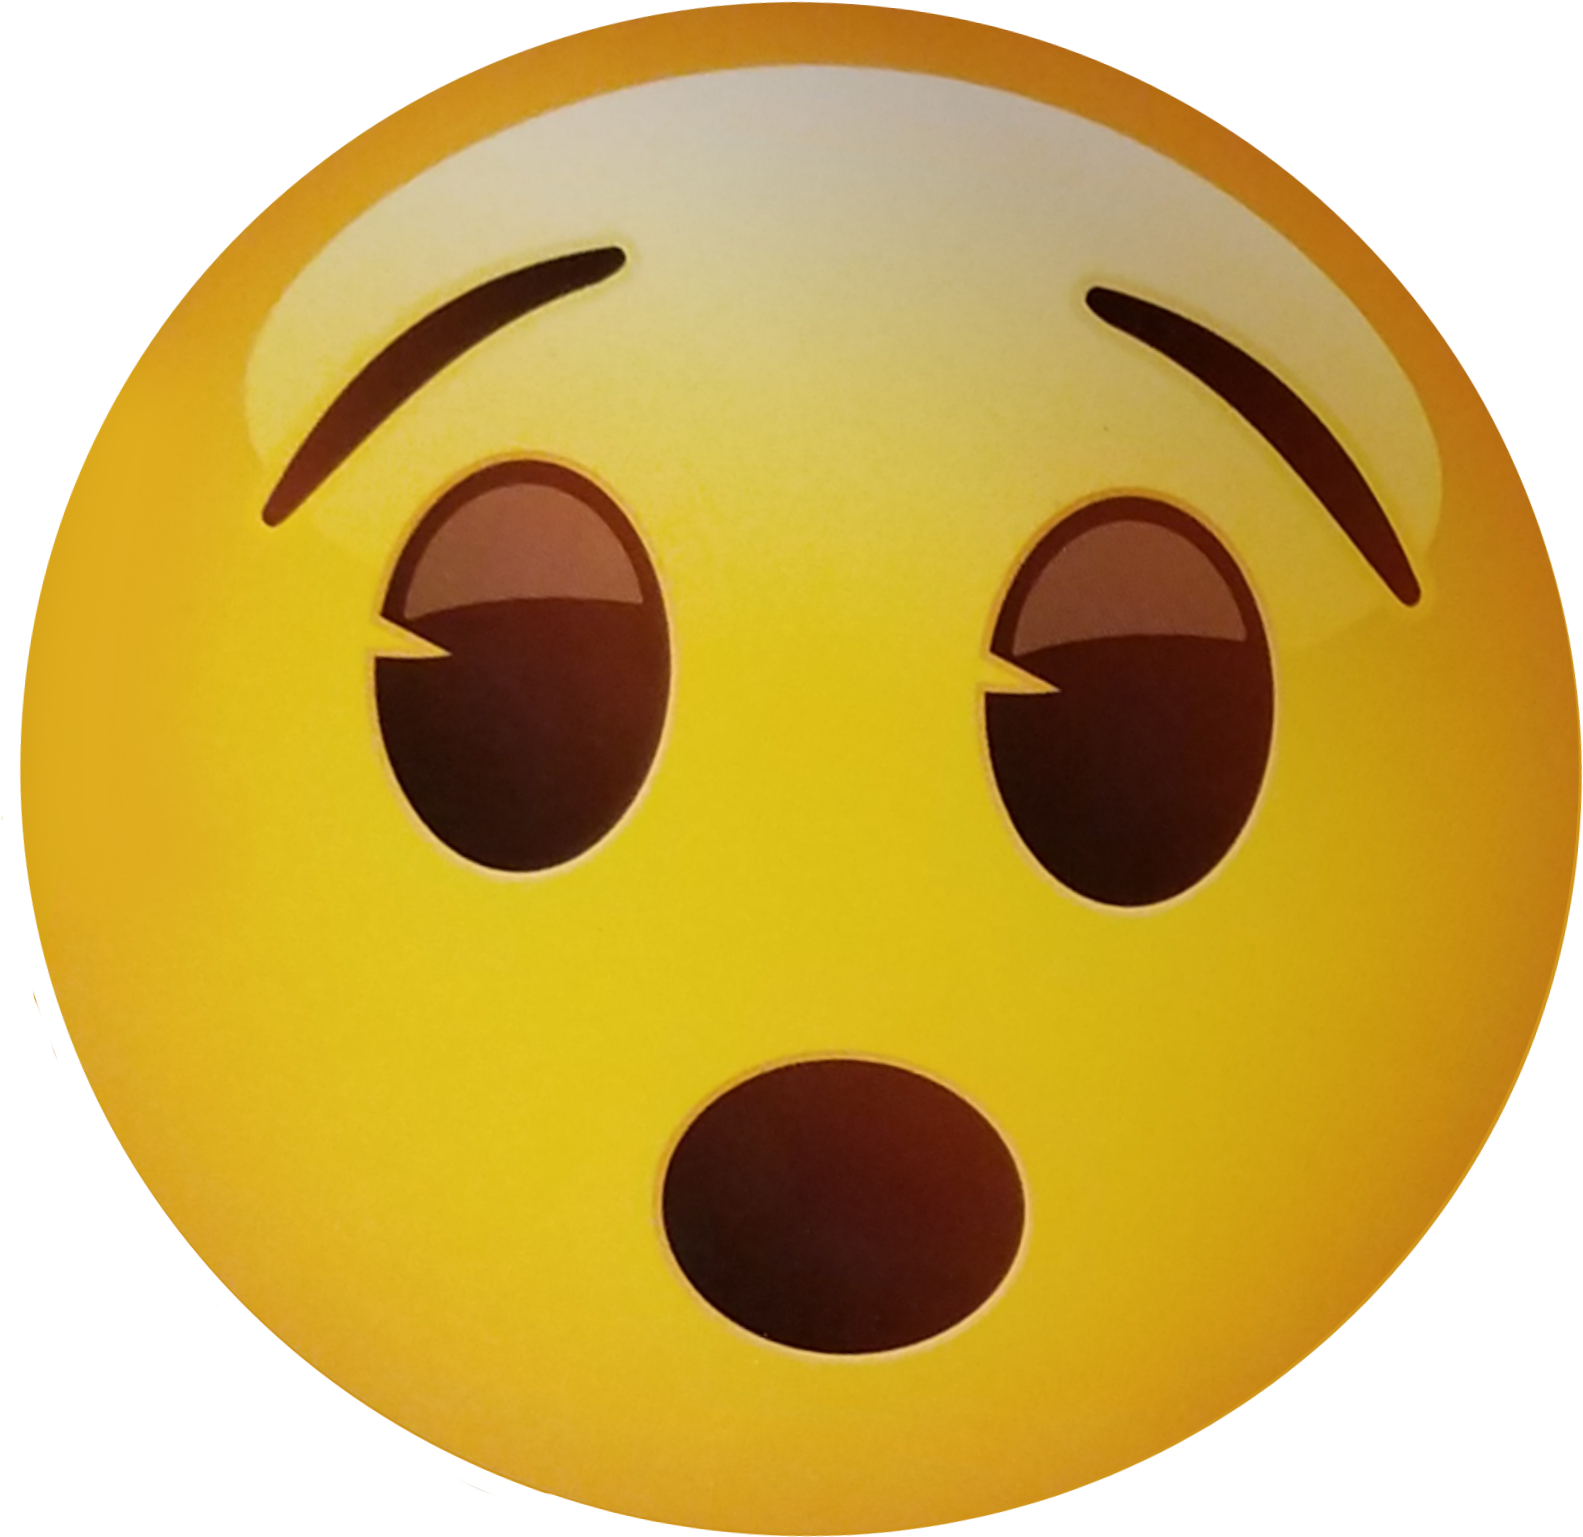 Free Smiley Face Emoji Transparent Background, Download Free Clip Art, Free Clip Art ...